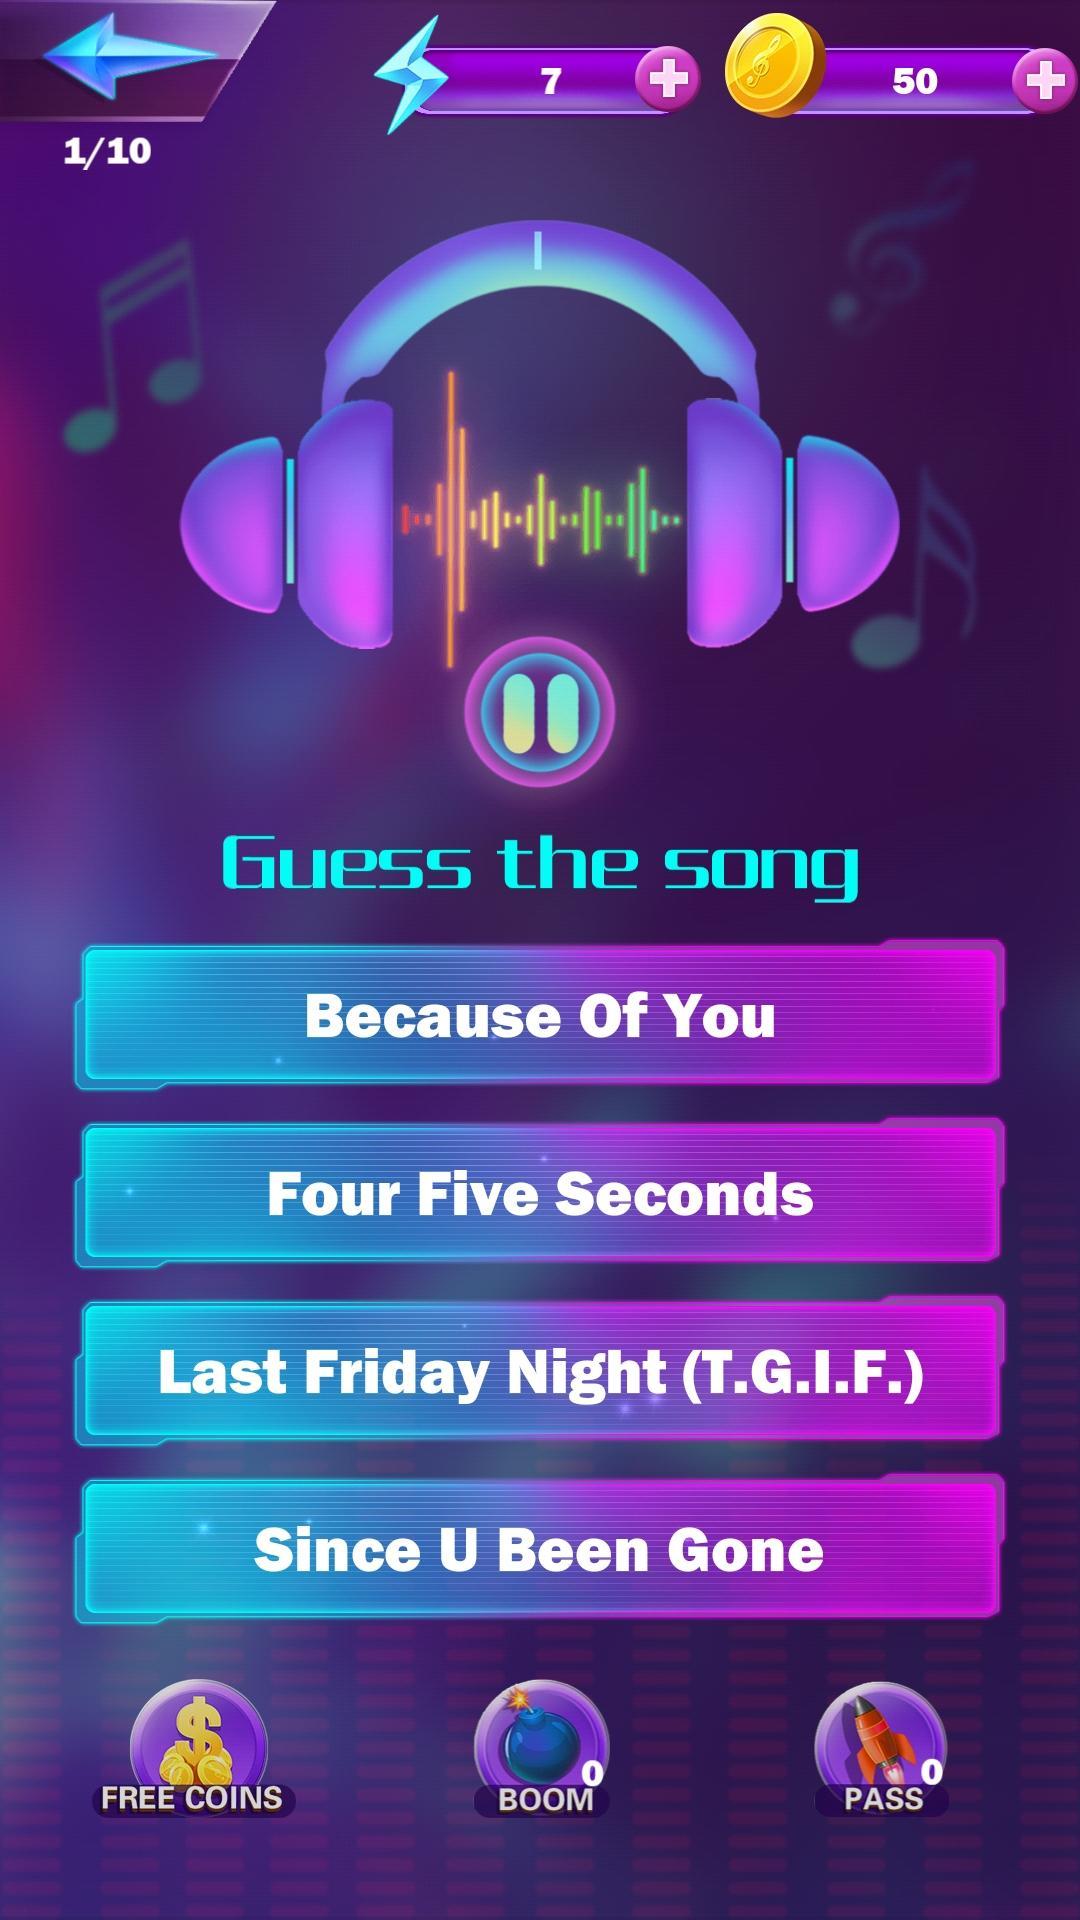 spise Blive ved affældige Music Quiz - Guess Popular Songs & Music for Android - APK Download